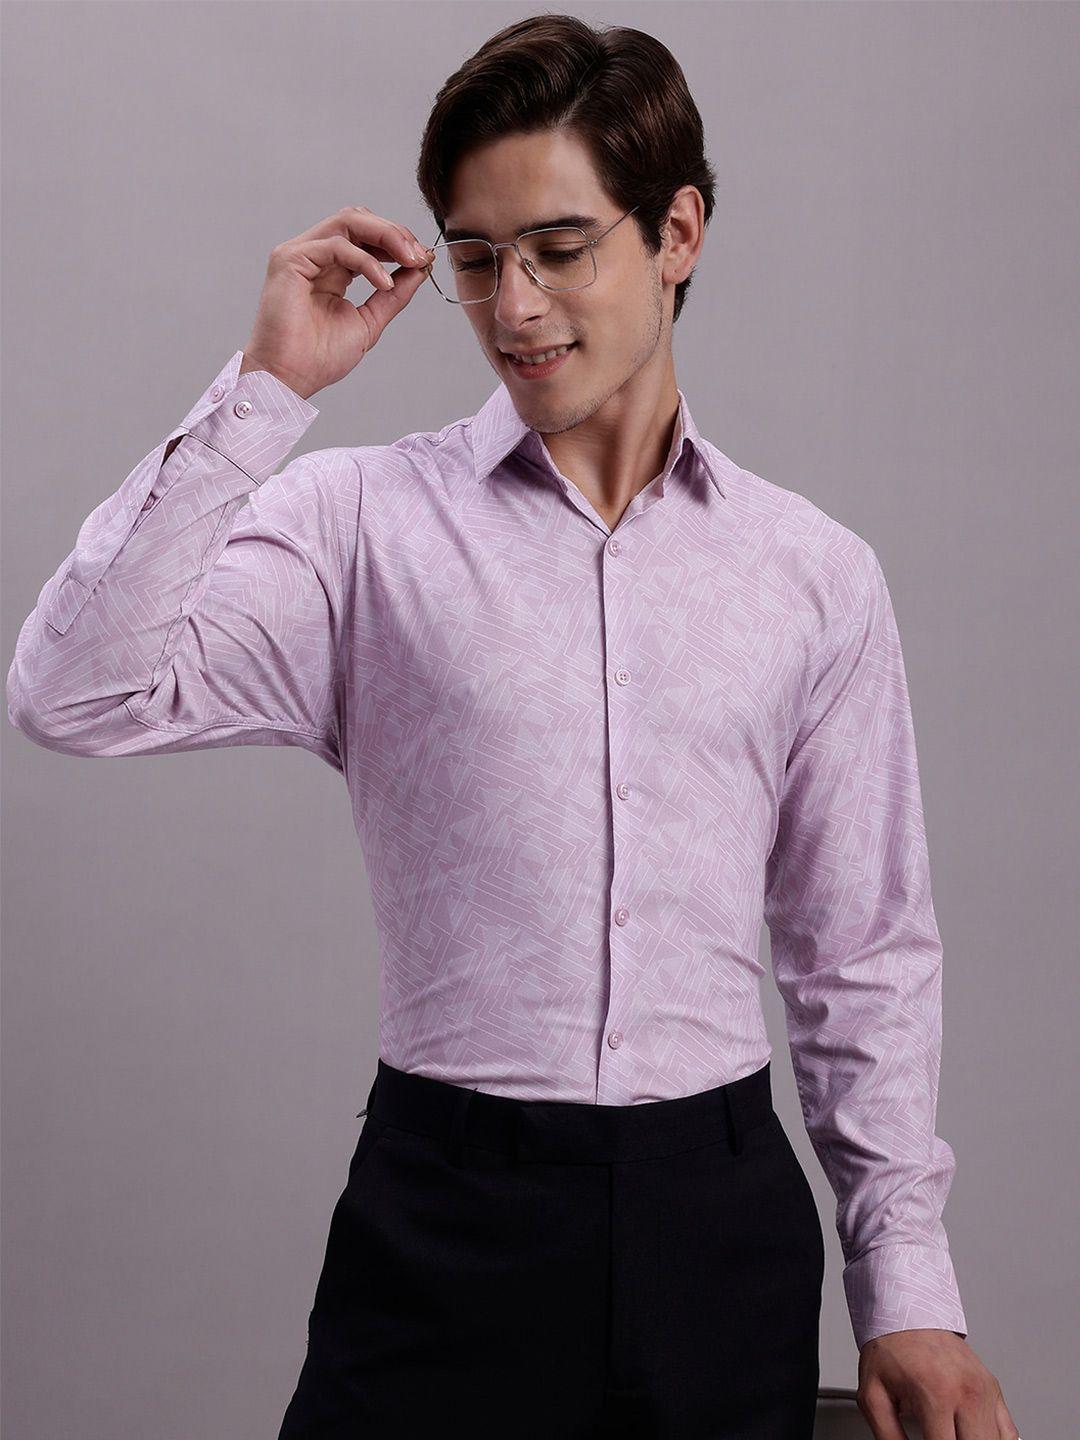 jainish classic geometric printed spread collar regular fit polycotton formal shirt